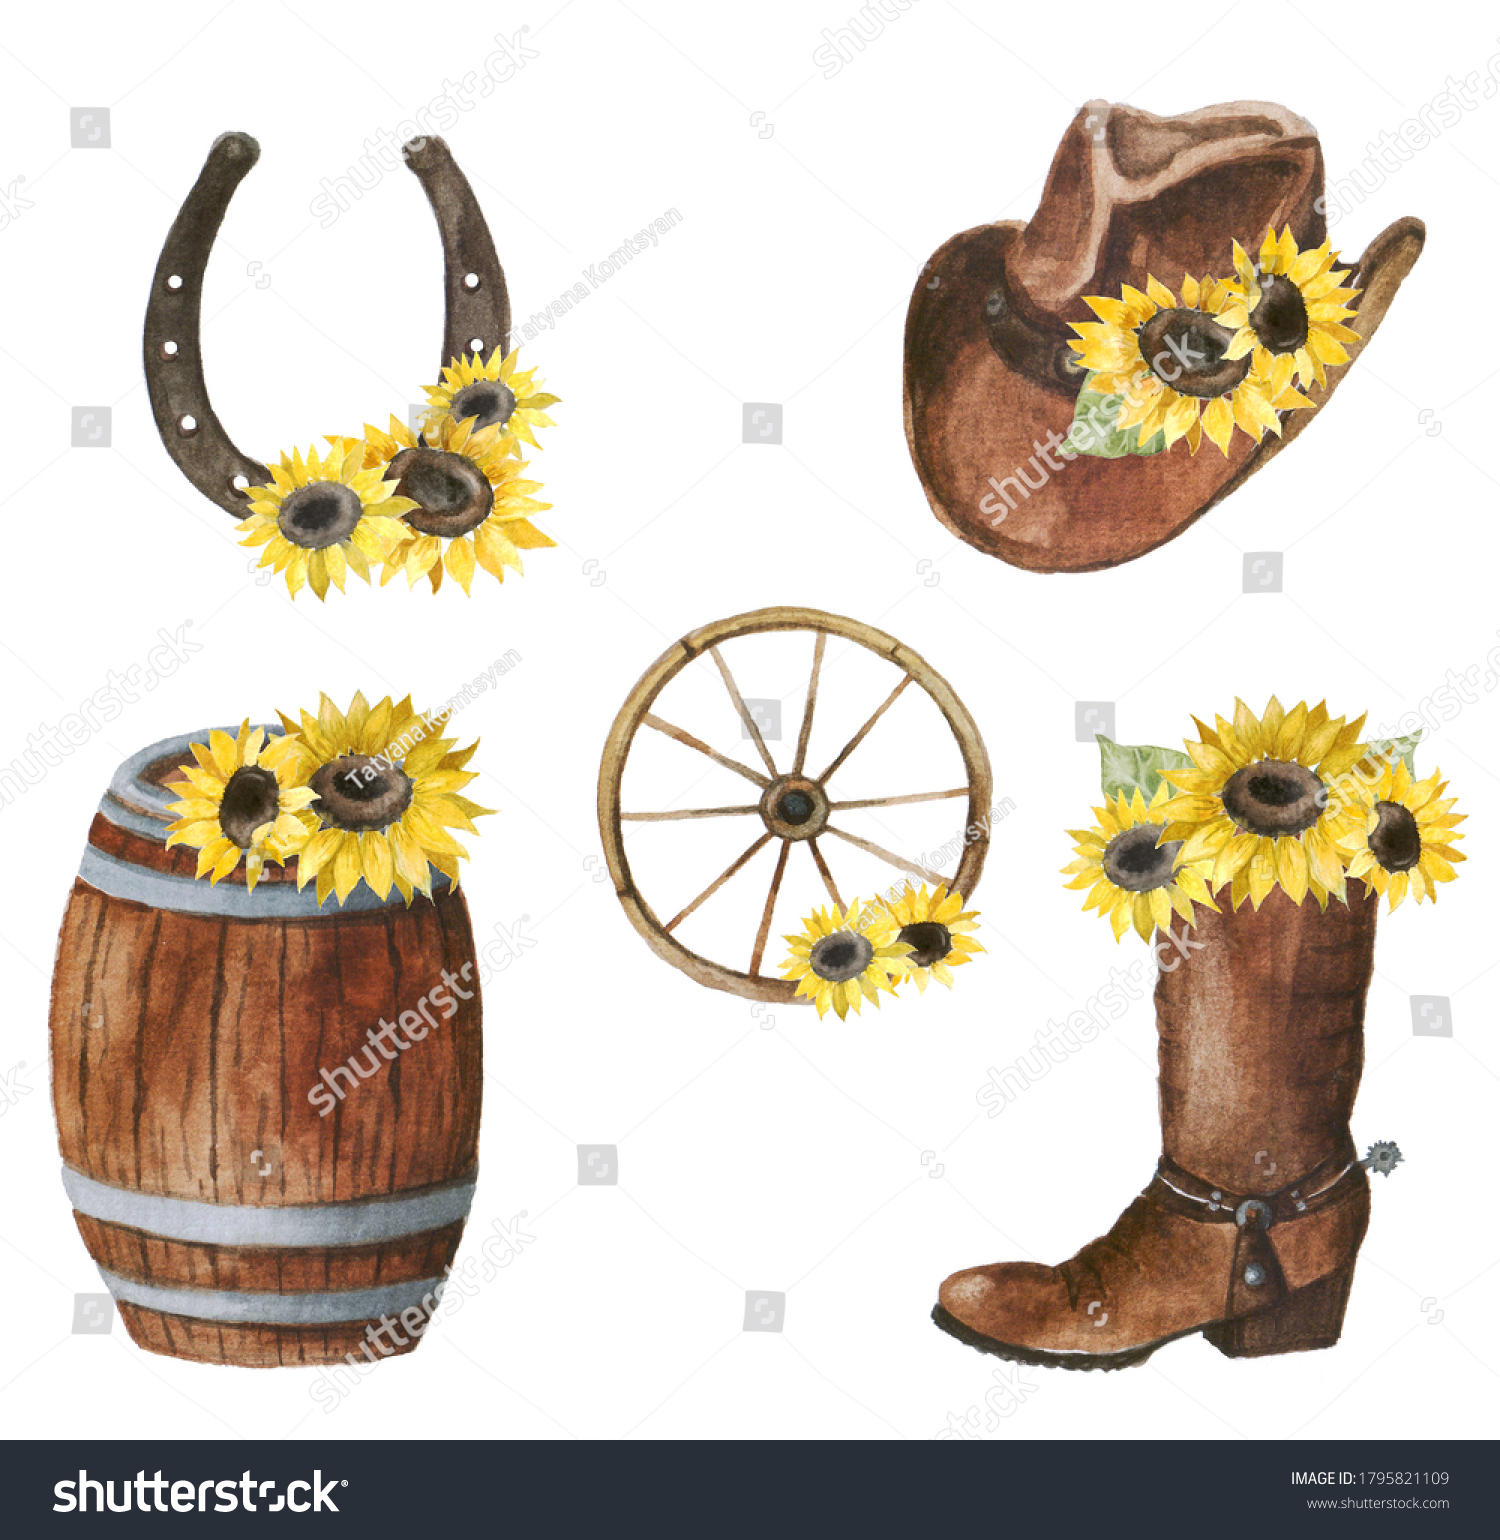 2,067 Cowboys range Images, Stock Photos & Vectors | Shutterstock